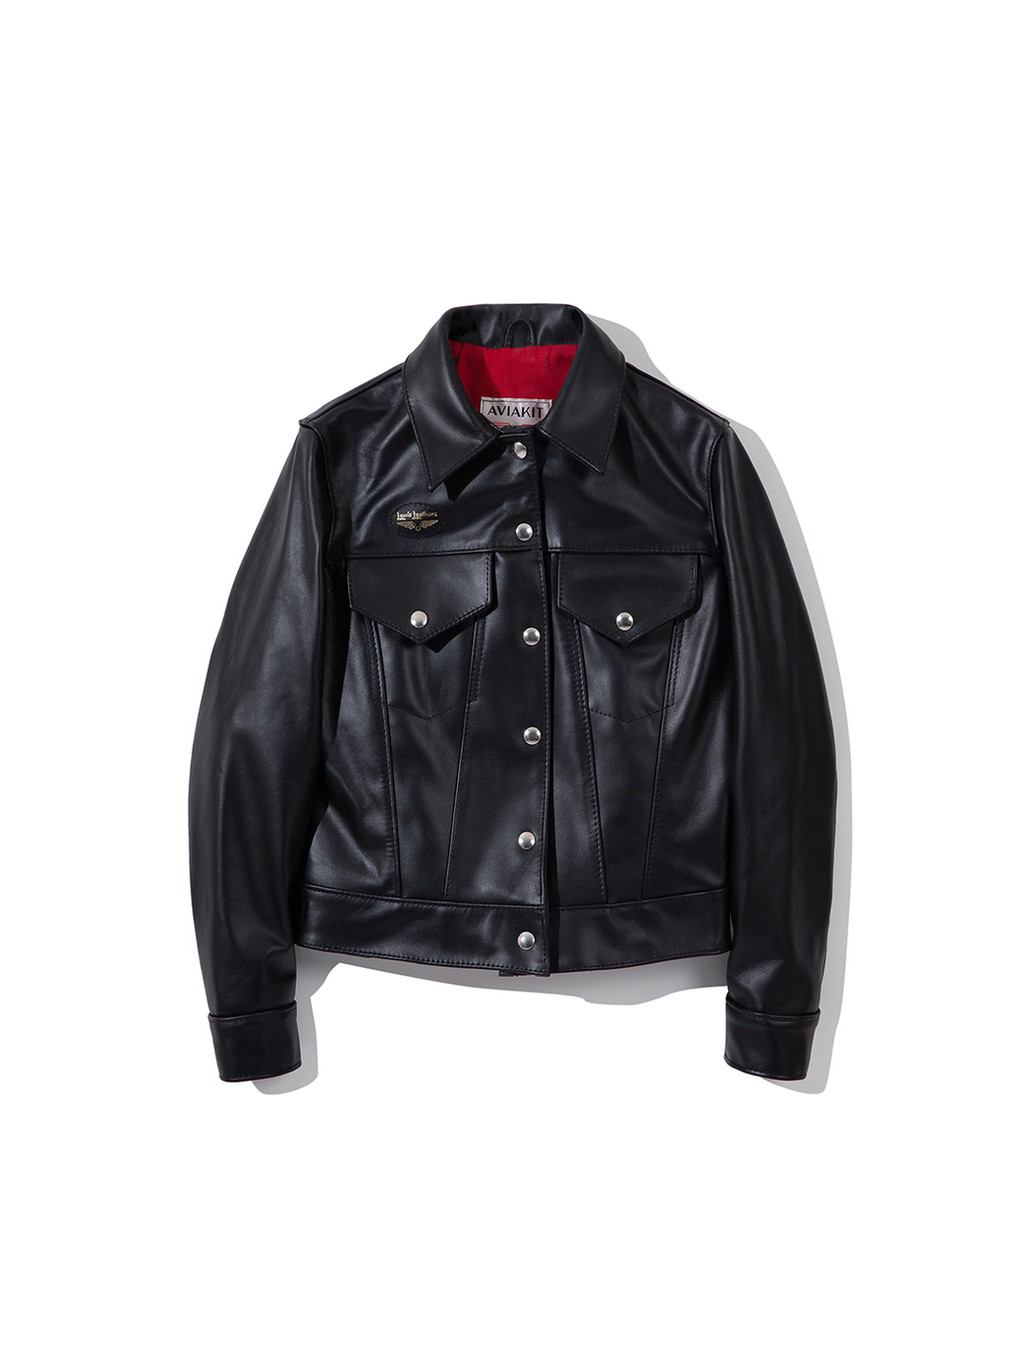 Lewis Leathers - 988 Western jacket in Black Horse